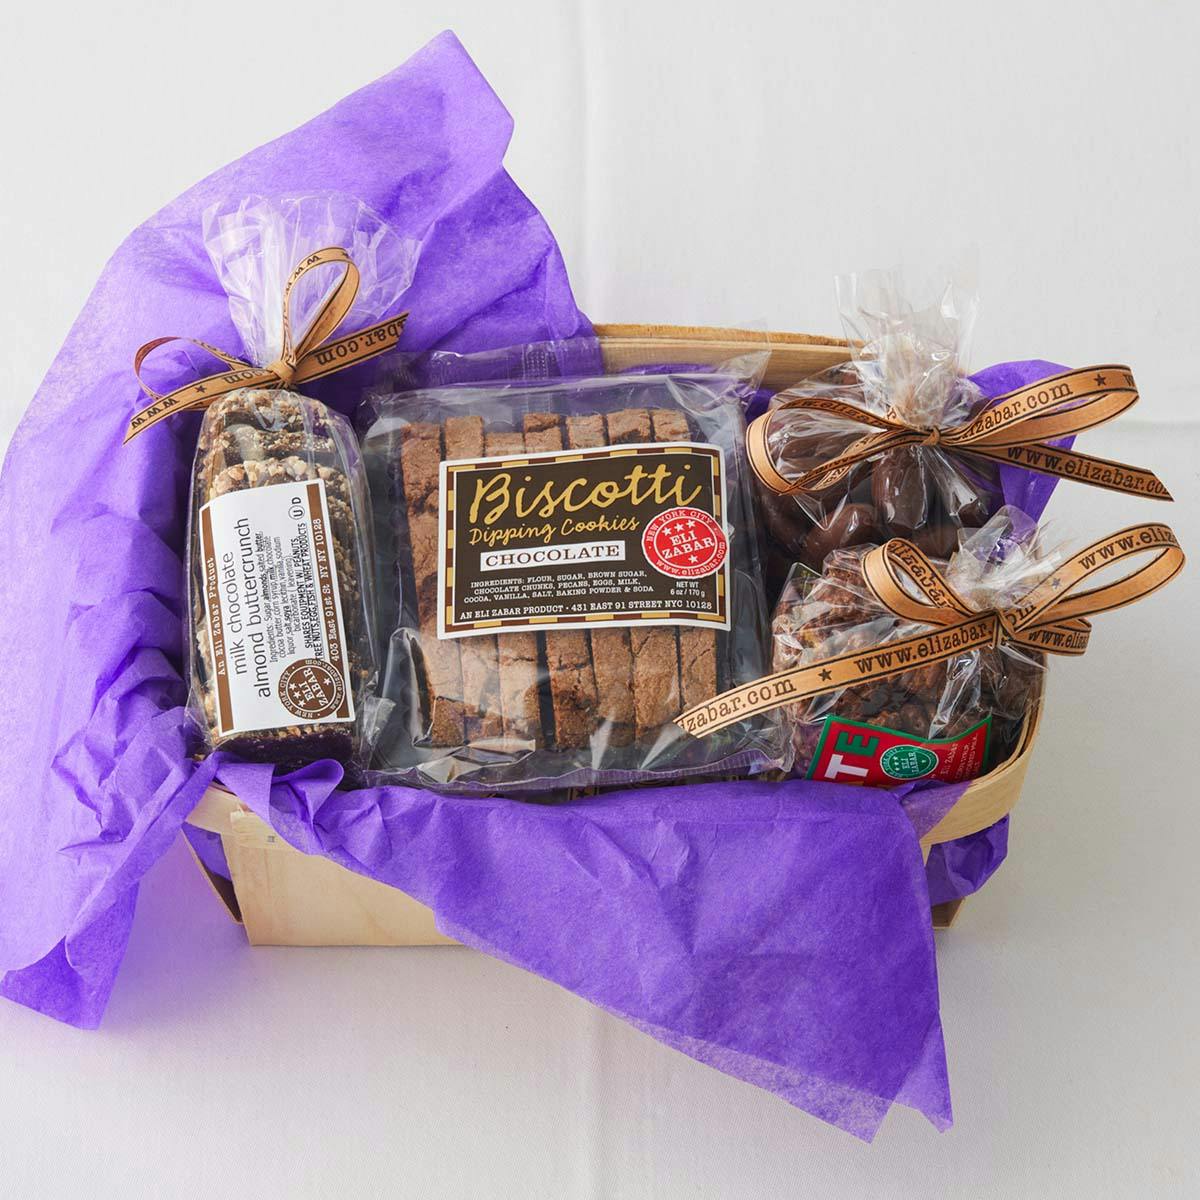 https://goldbelly.imgix.net/uploads/showcase_media_asset/image/146802/EliZabar-Chocolate-Lovers-Gift-Basket-Product-1.jpg?ixlib=react-9.0.2&auto=format&ar=1%3A1